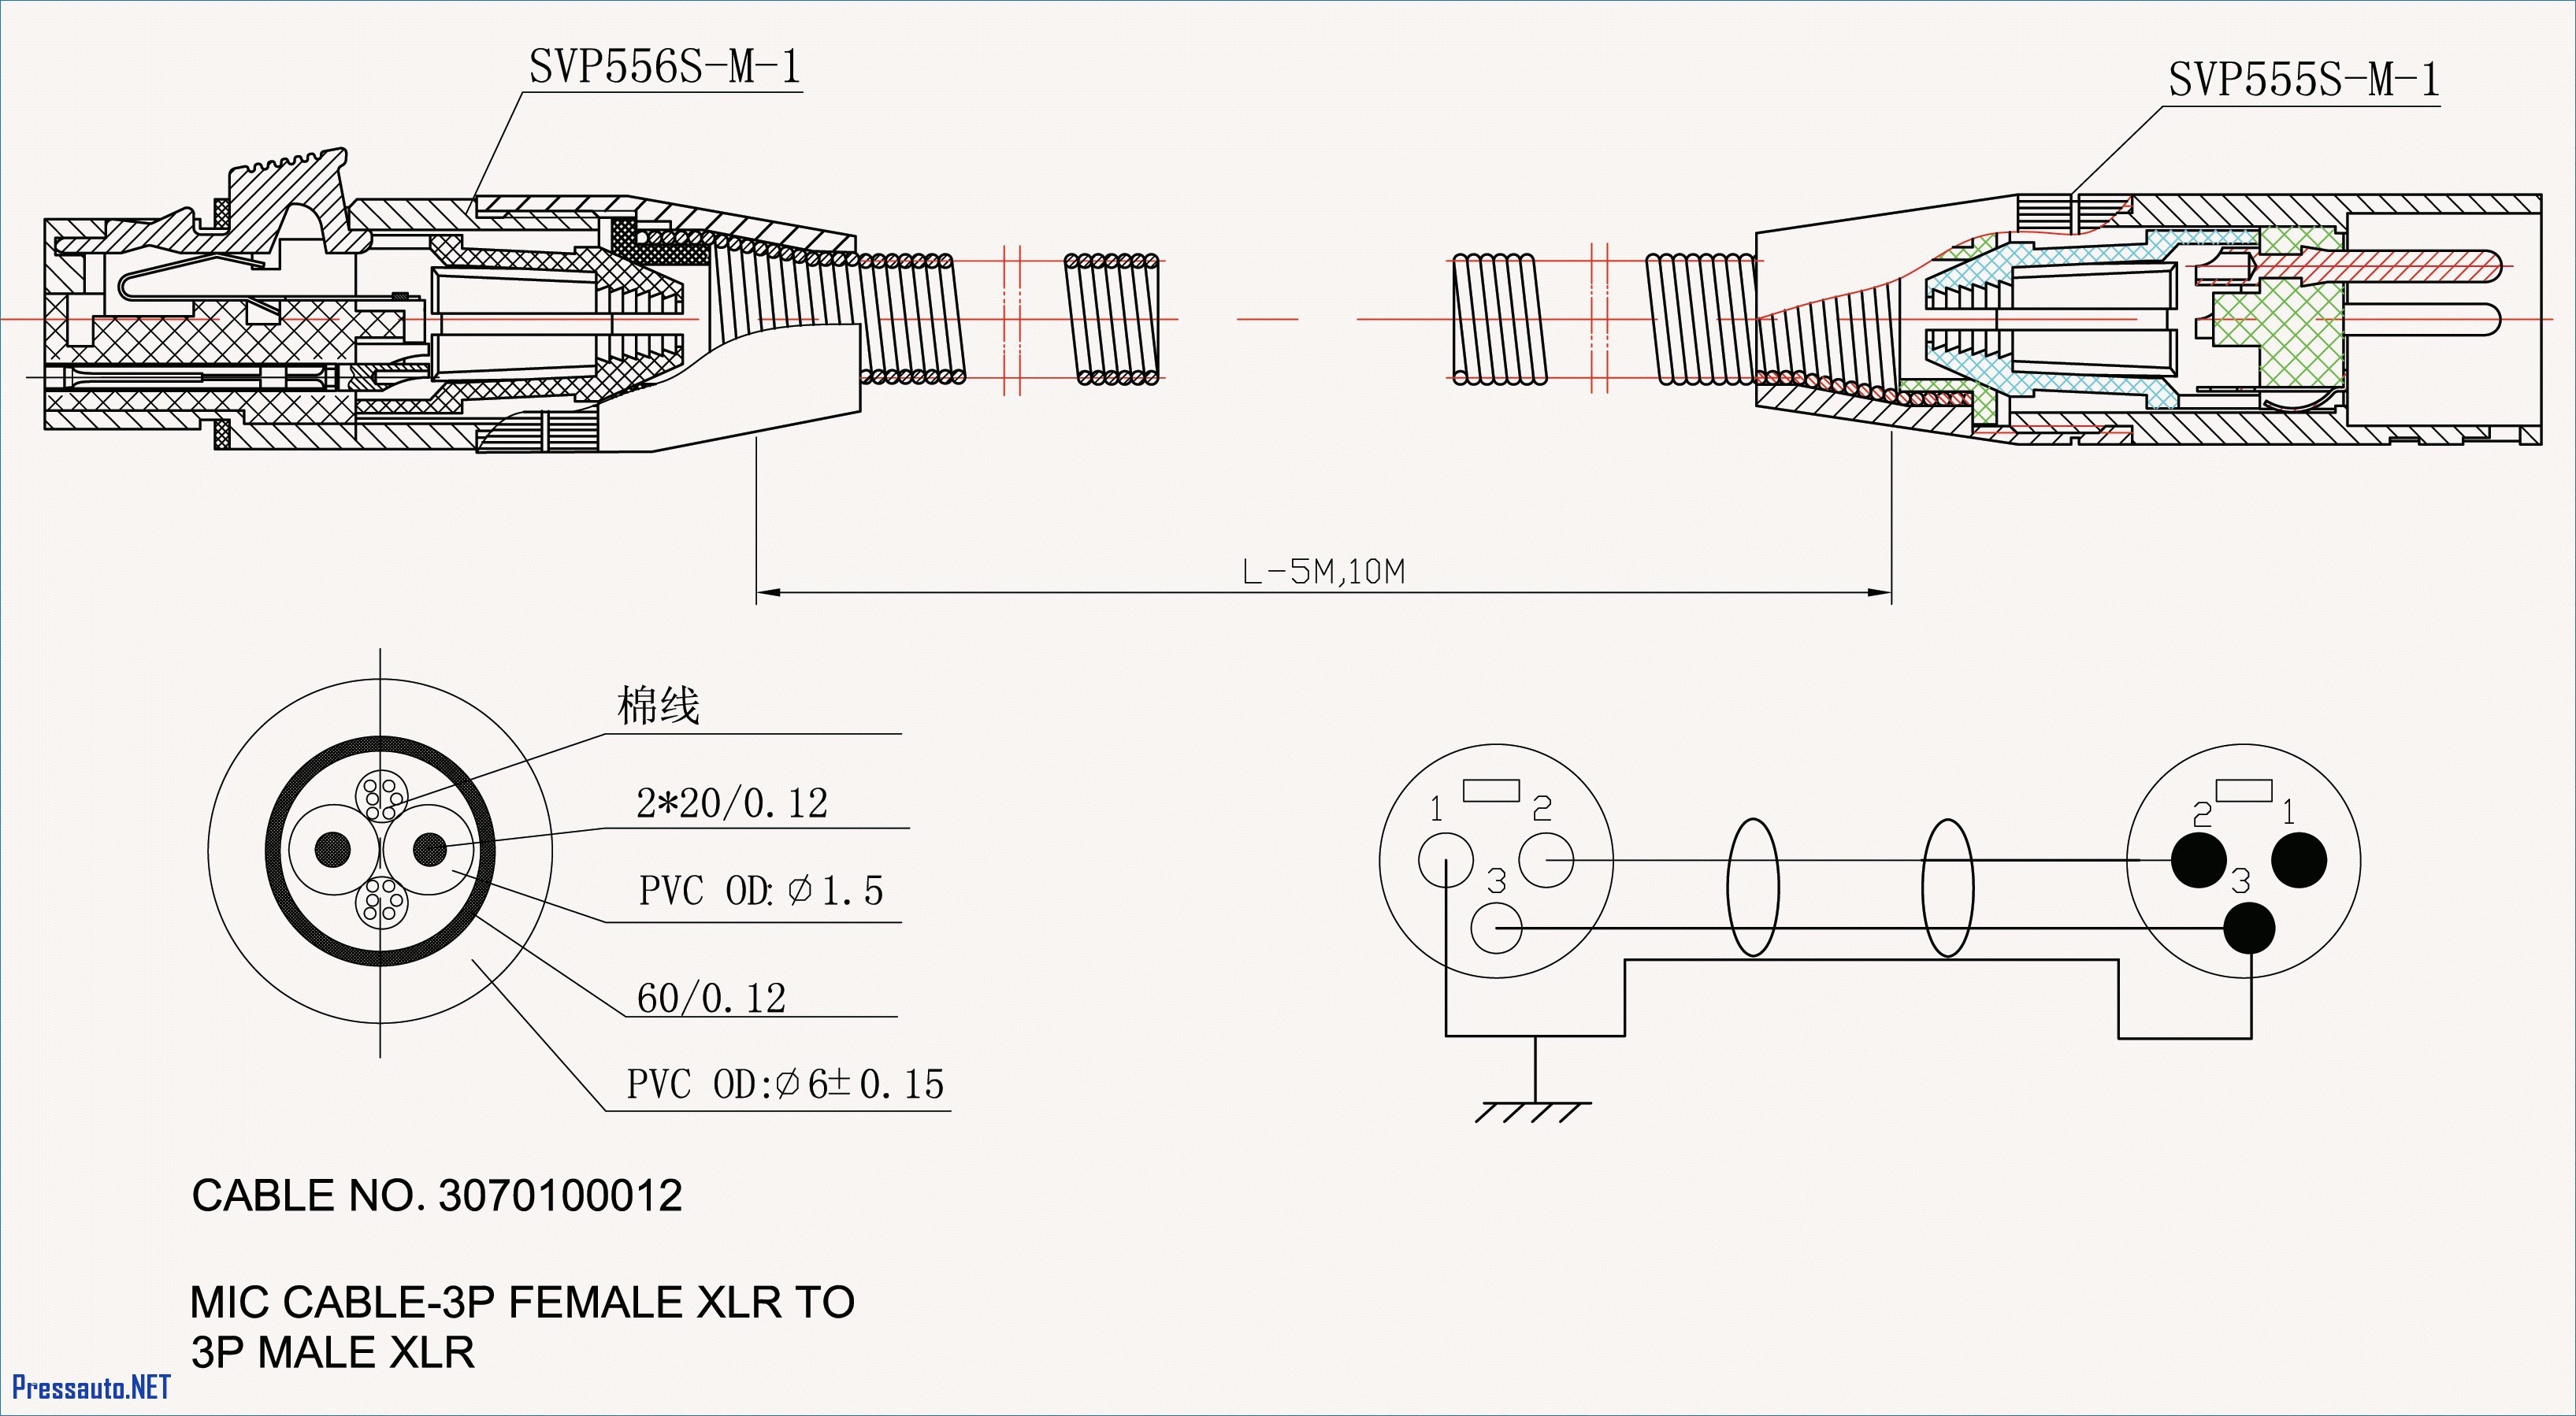 Wiring Diagram 6 Way Trailer Plug New Universal Trailer Wiring Diagram Color Code Valid 6 Pin